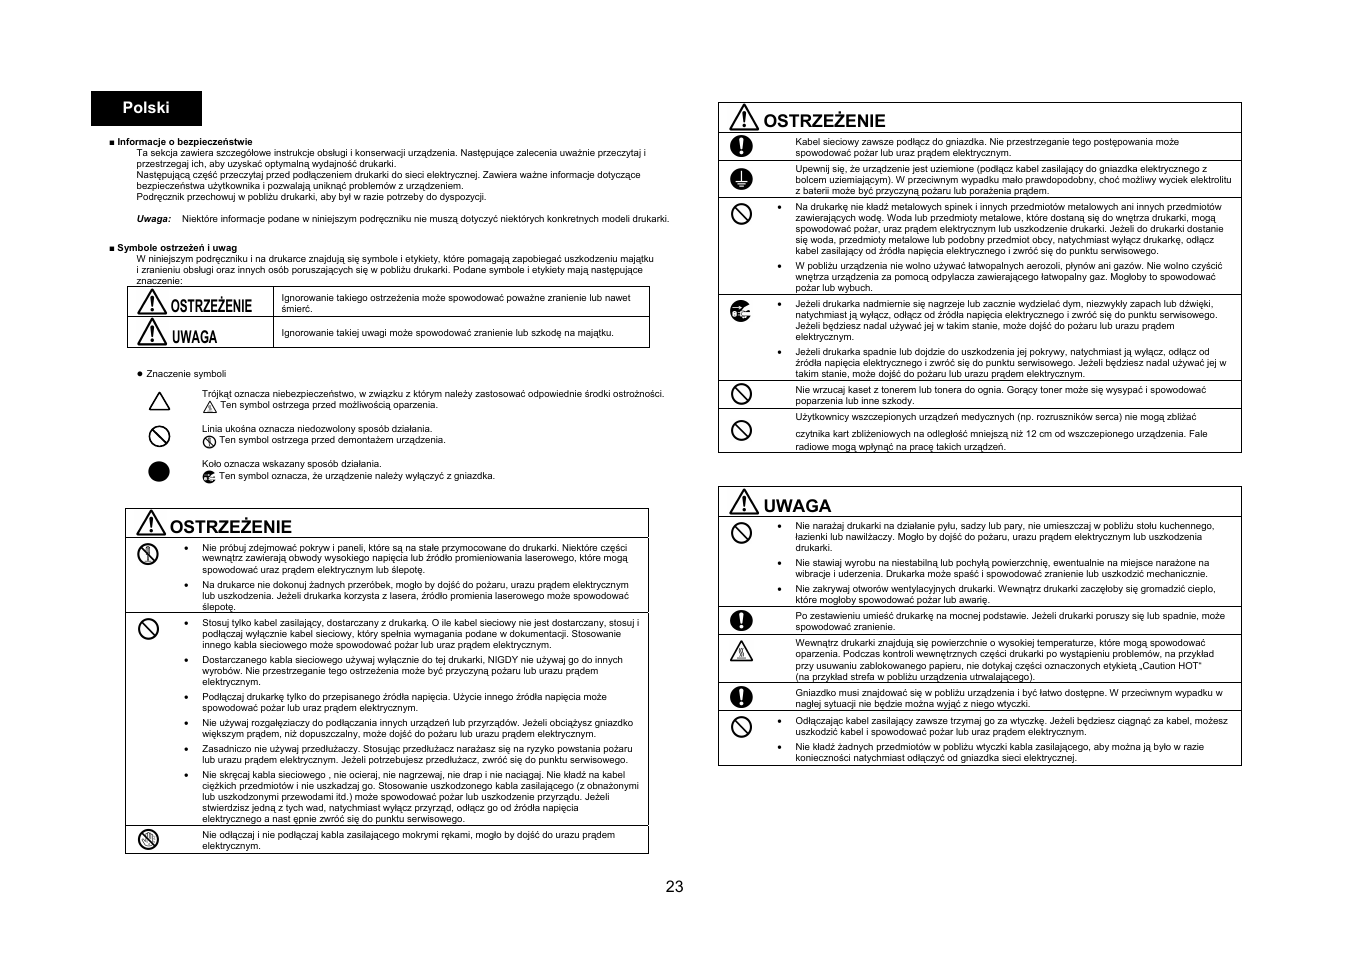 Ostrzeżenie, Uwaga, 23 polski | Konica Minolta bizhub 4050 User Manual | Page 24 / 67